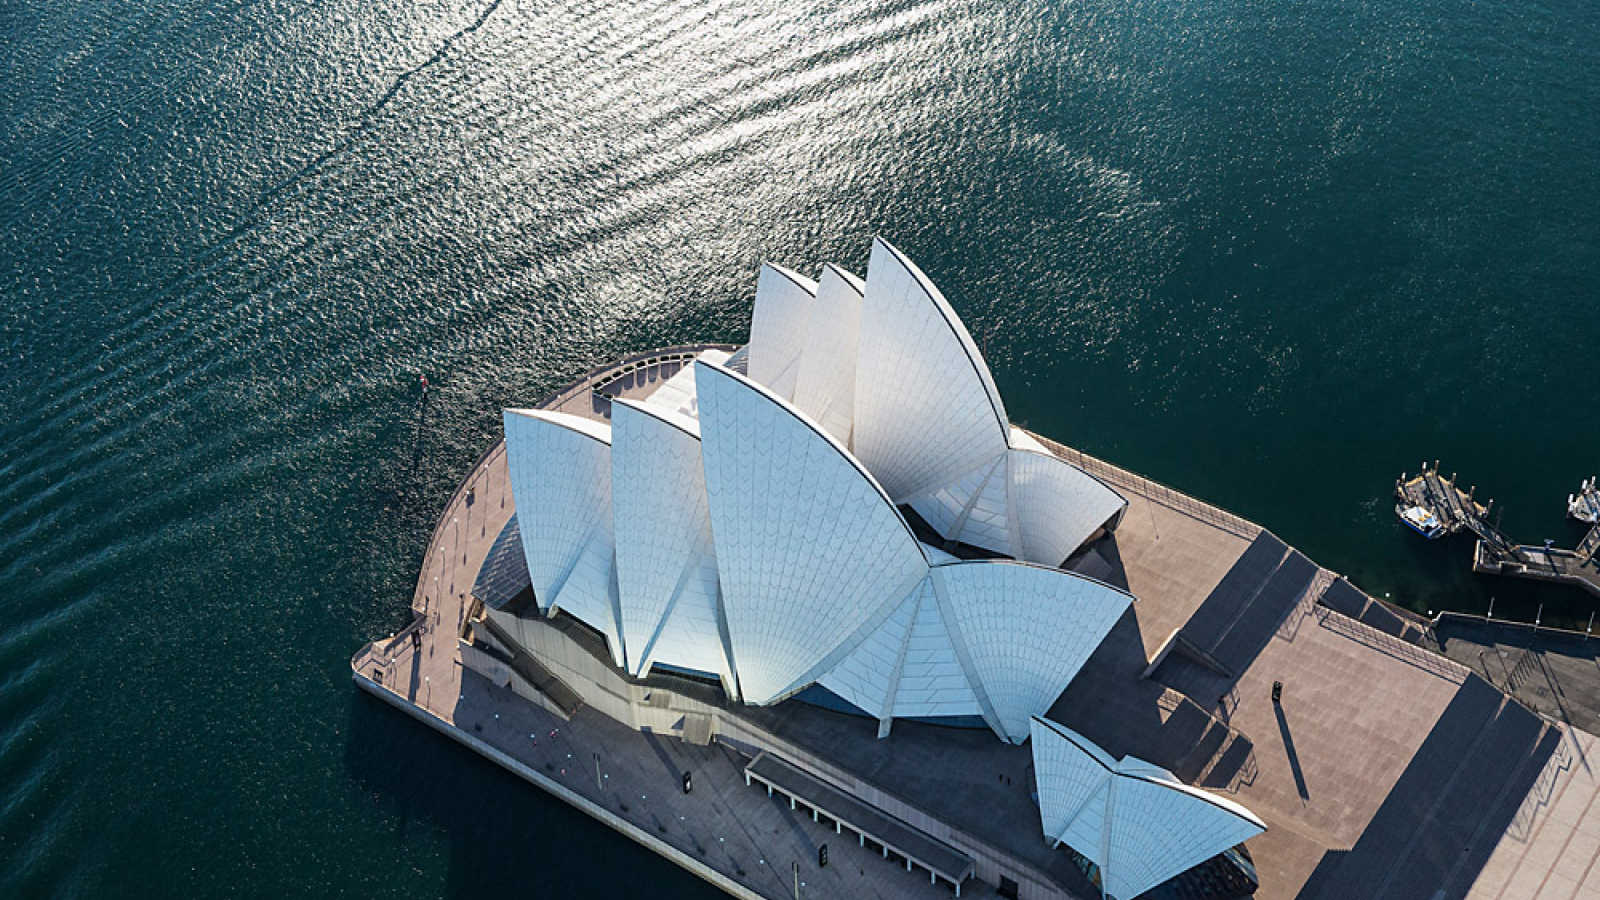 Sydney Opera House - Wikipedia